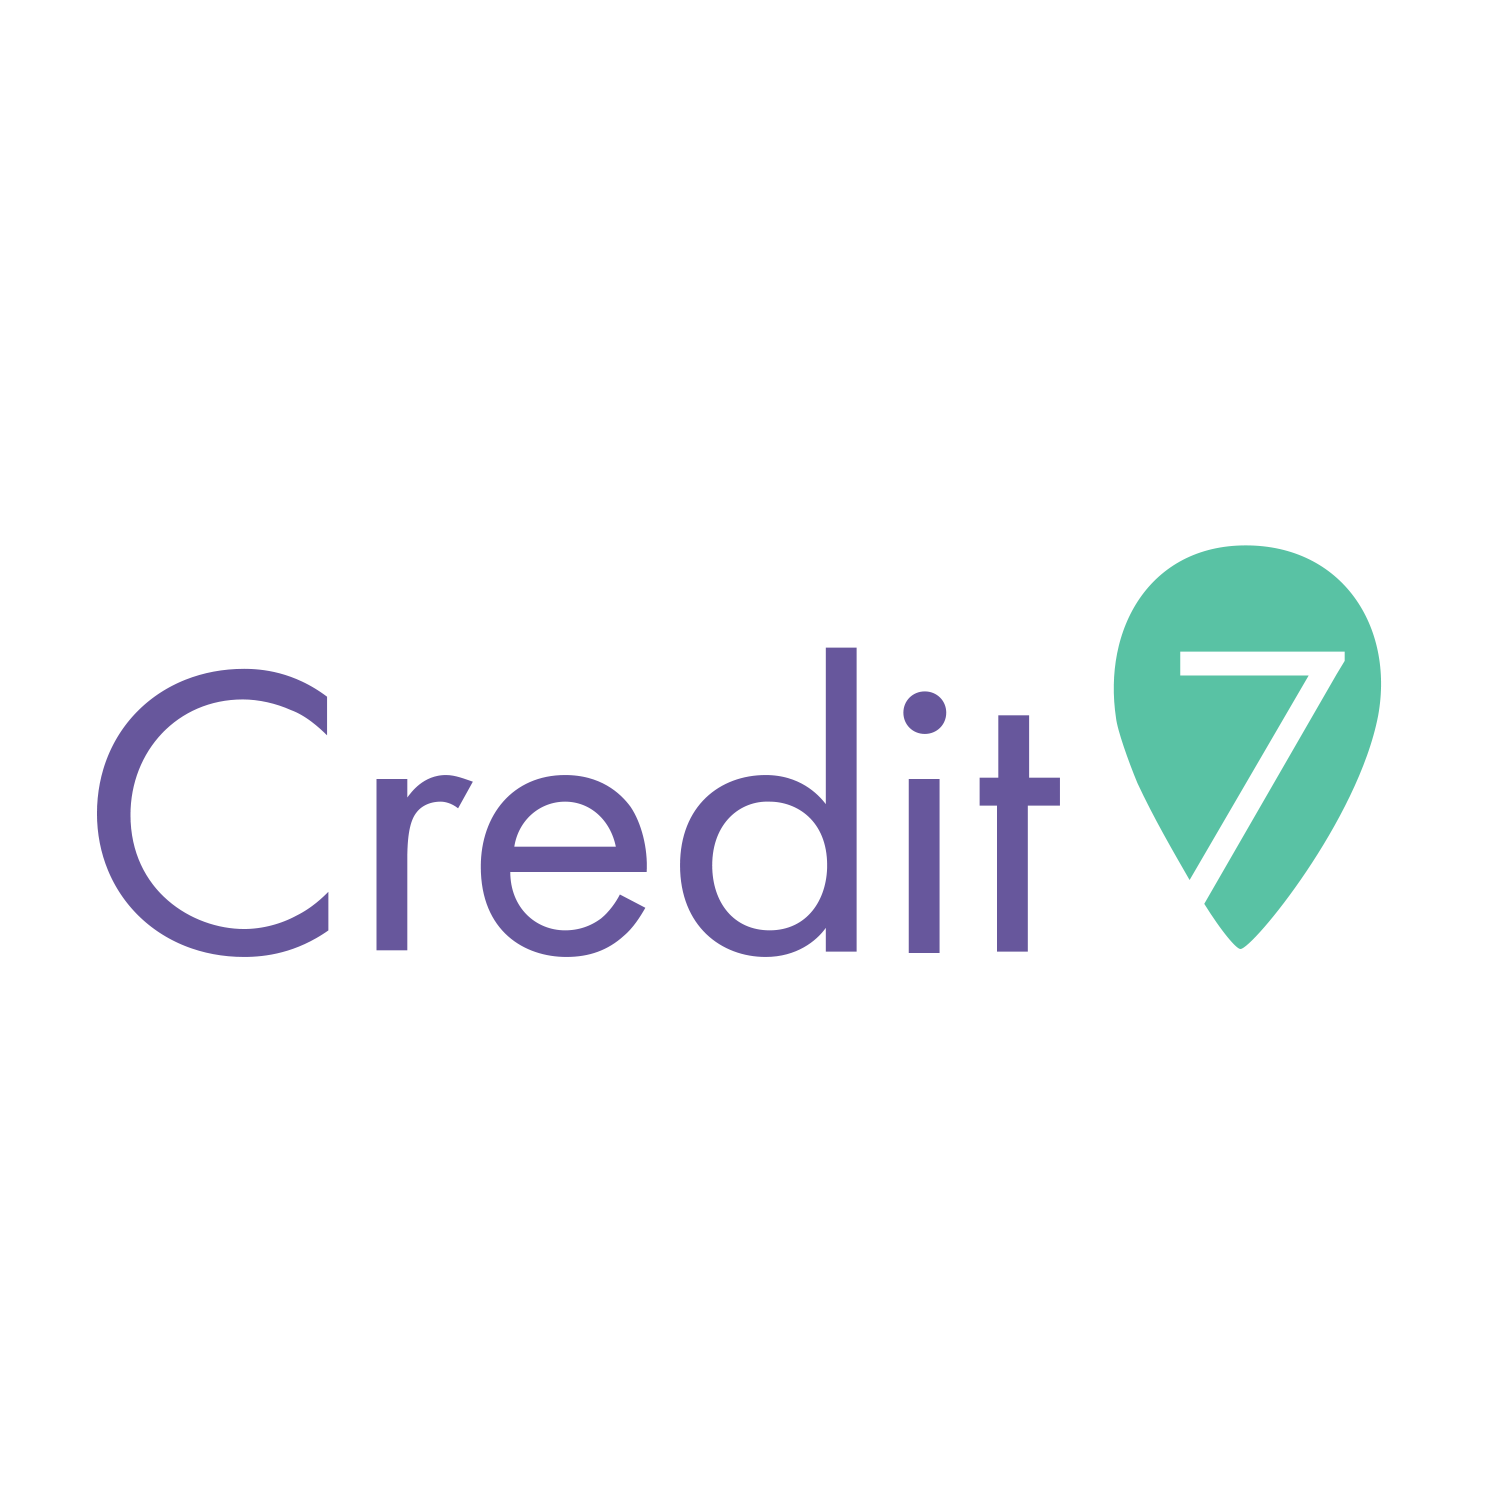 Займ кредит 7. Credit7. Credit7 лого. Кредит 7 лого. Credit 7 займ.